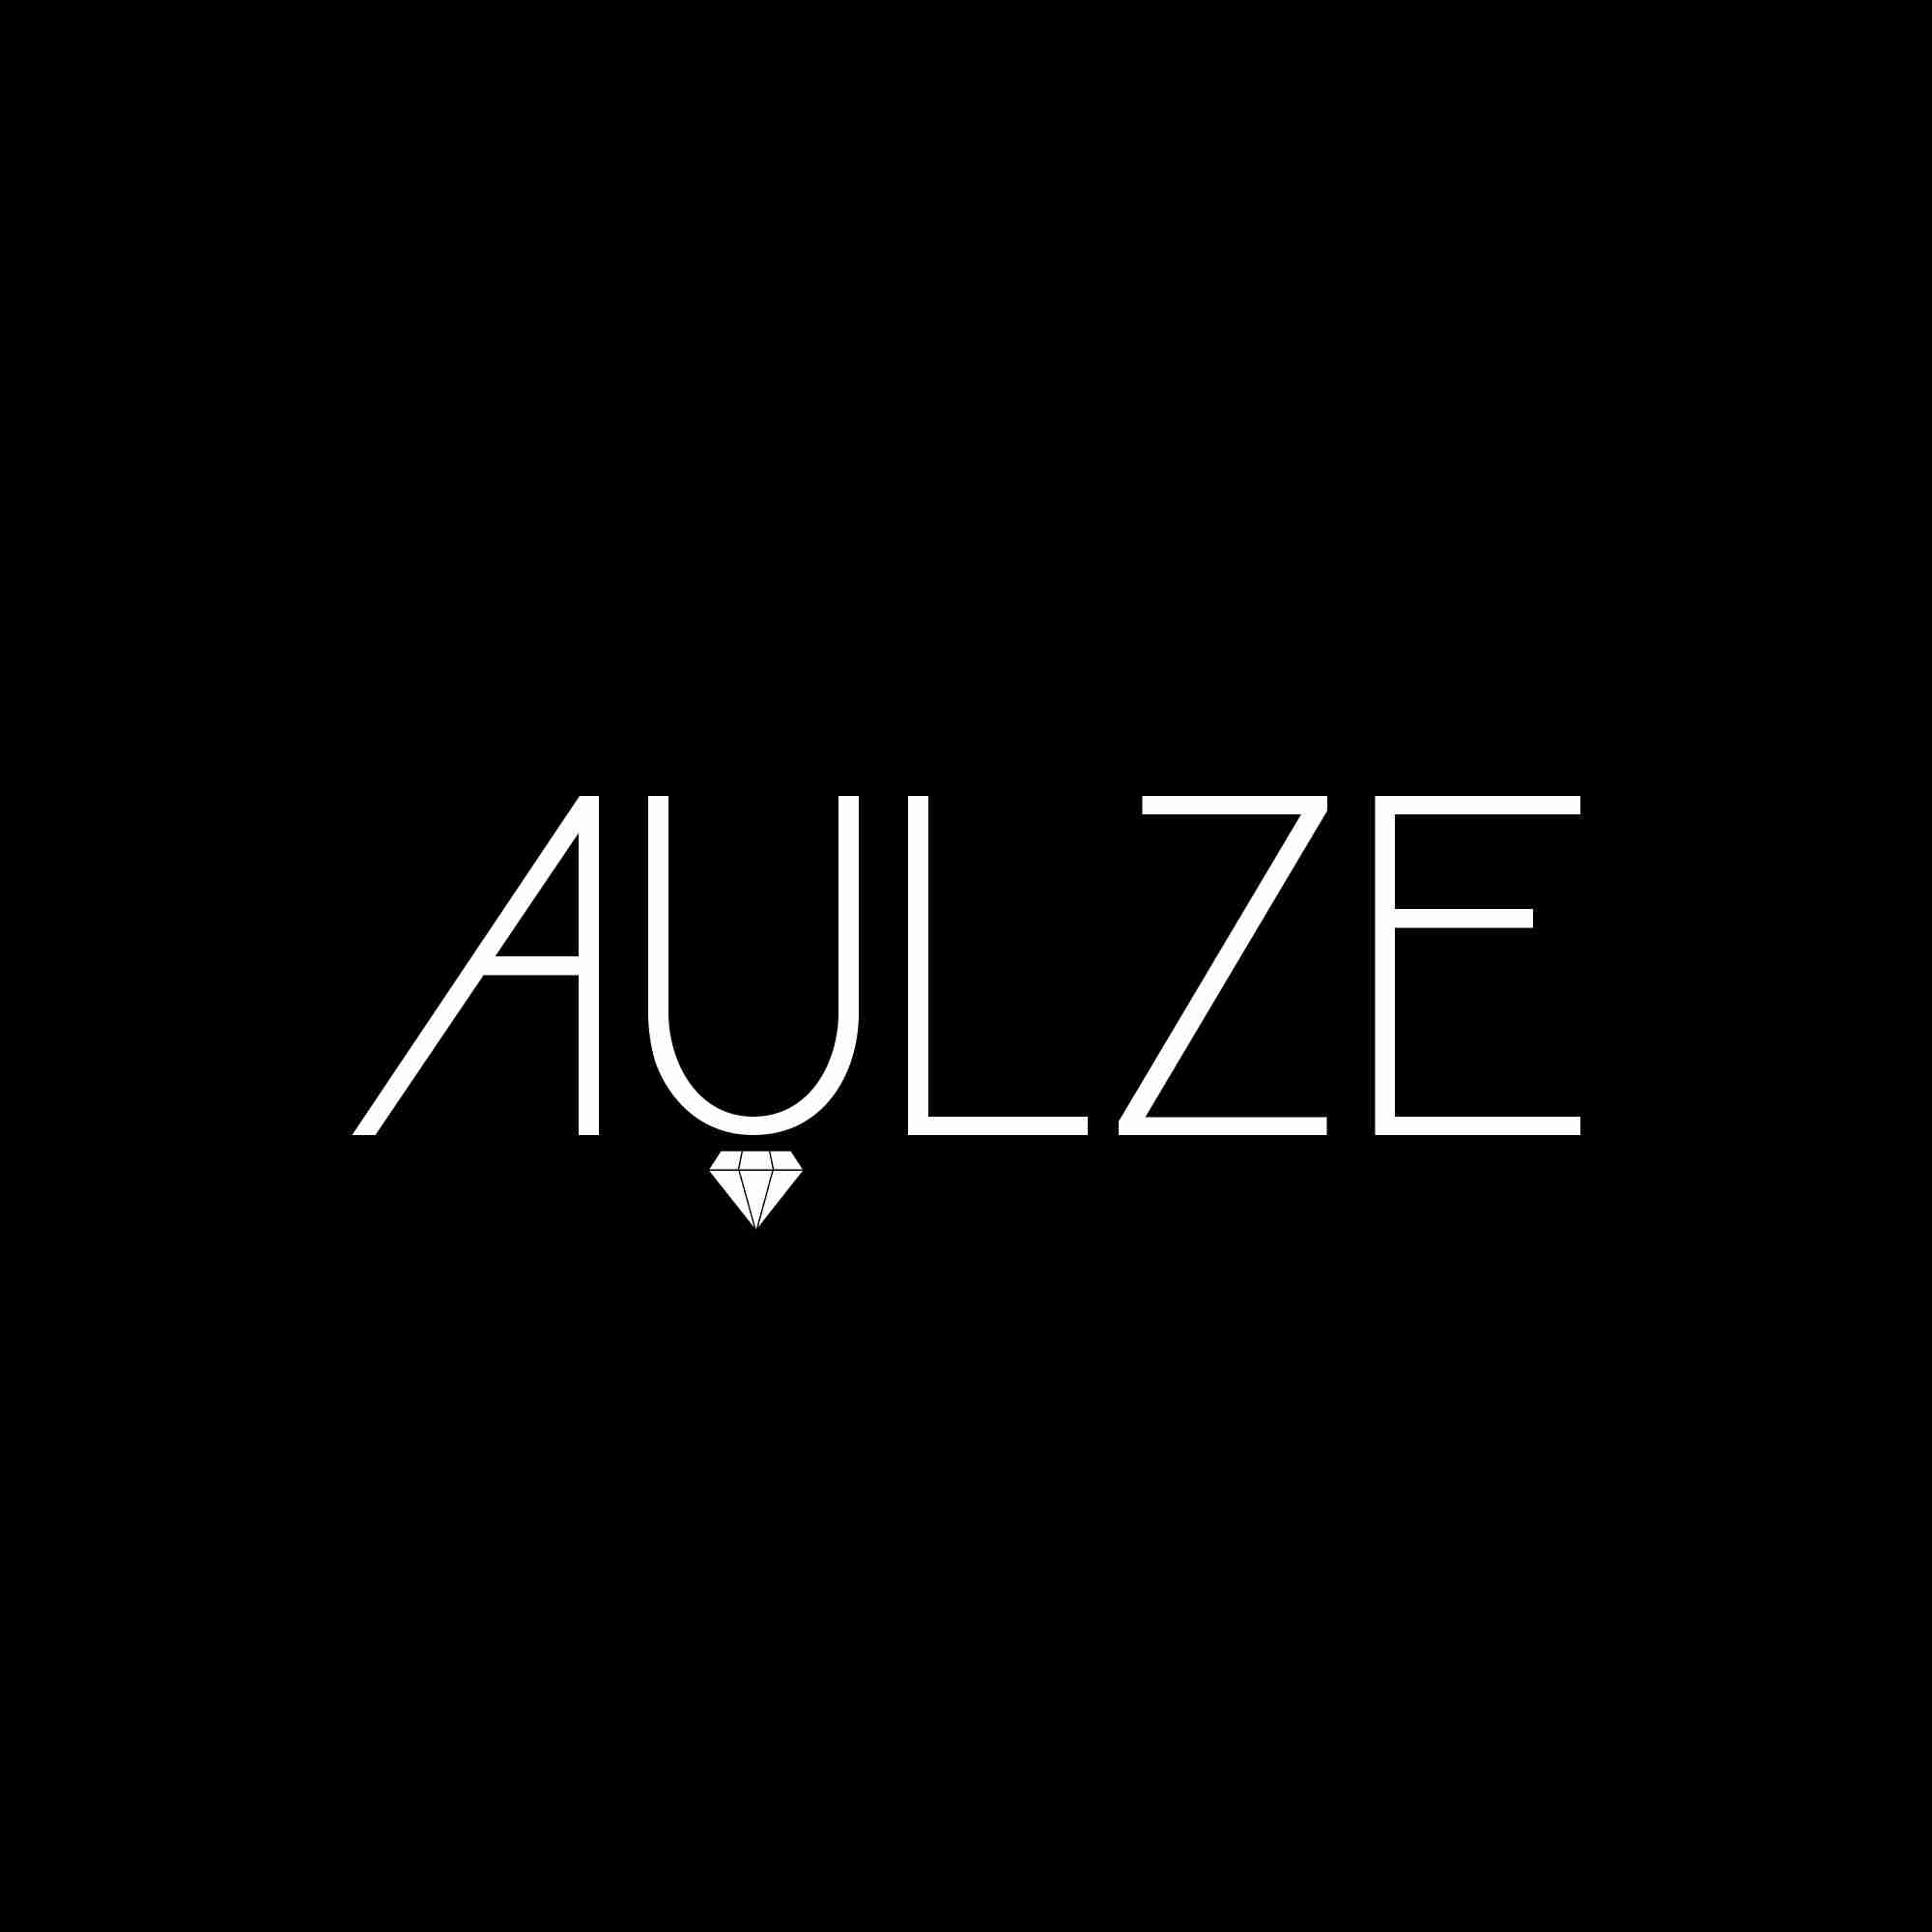 Aulze Official